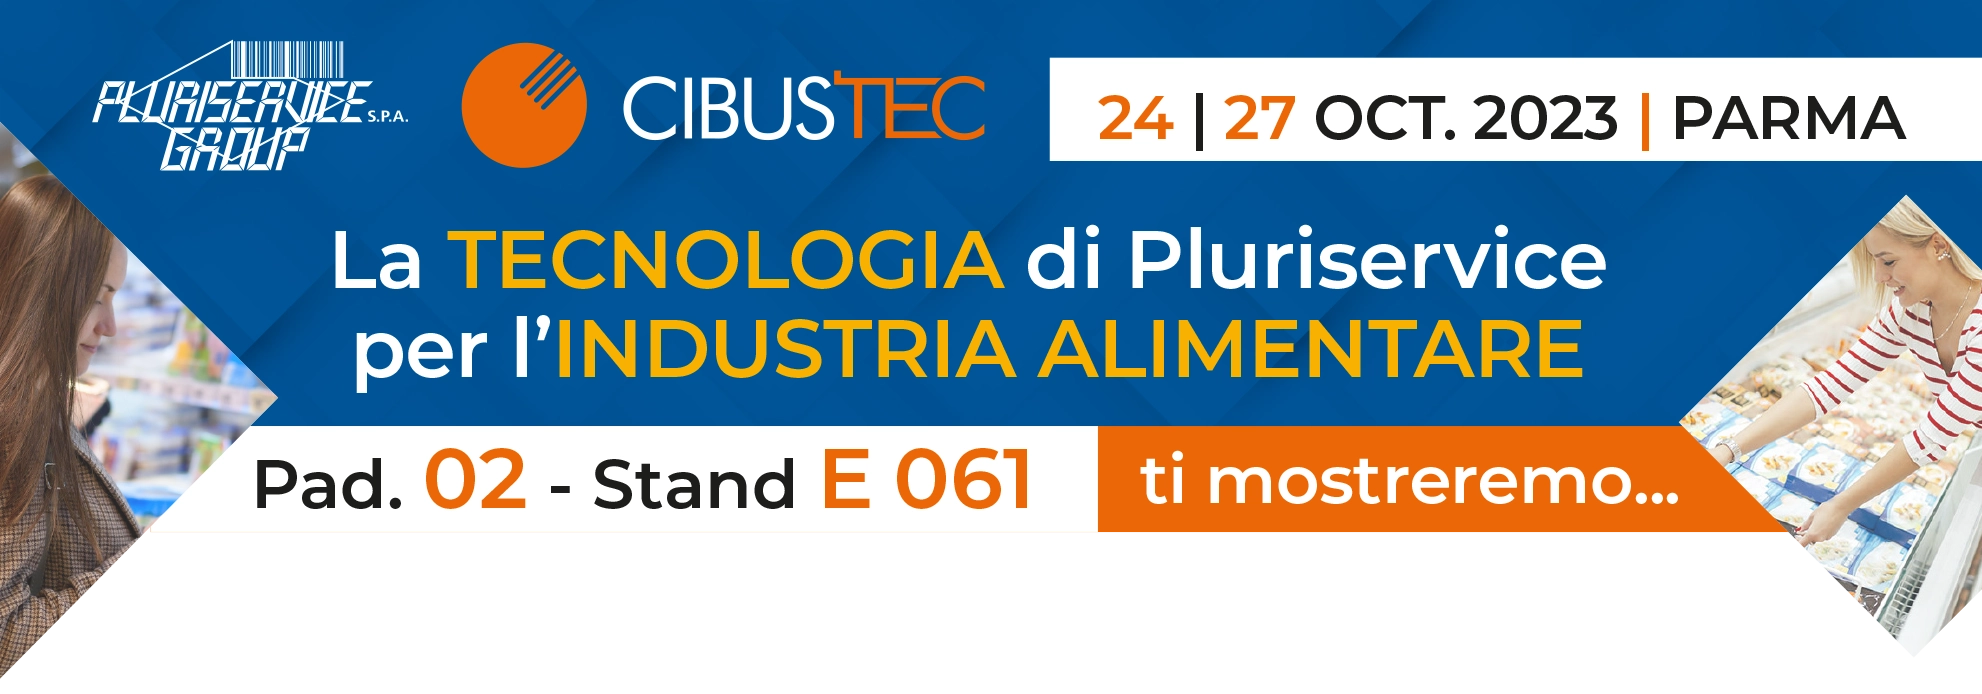 Pluriservice Group a Cibus Tec 2023 - Parma 24 27 ottobre 2023